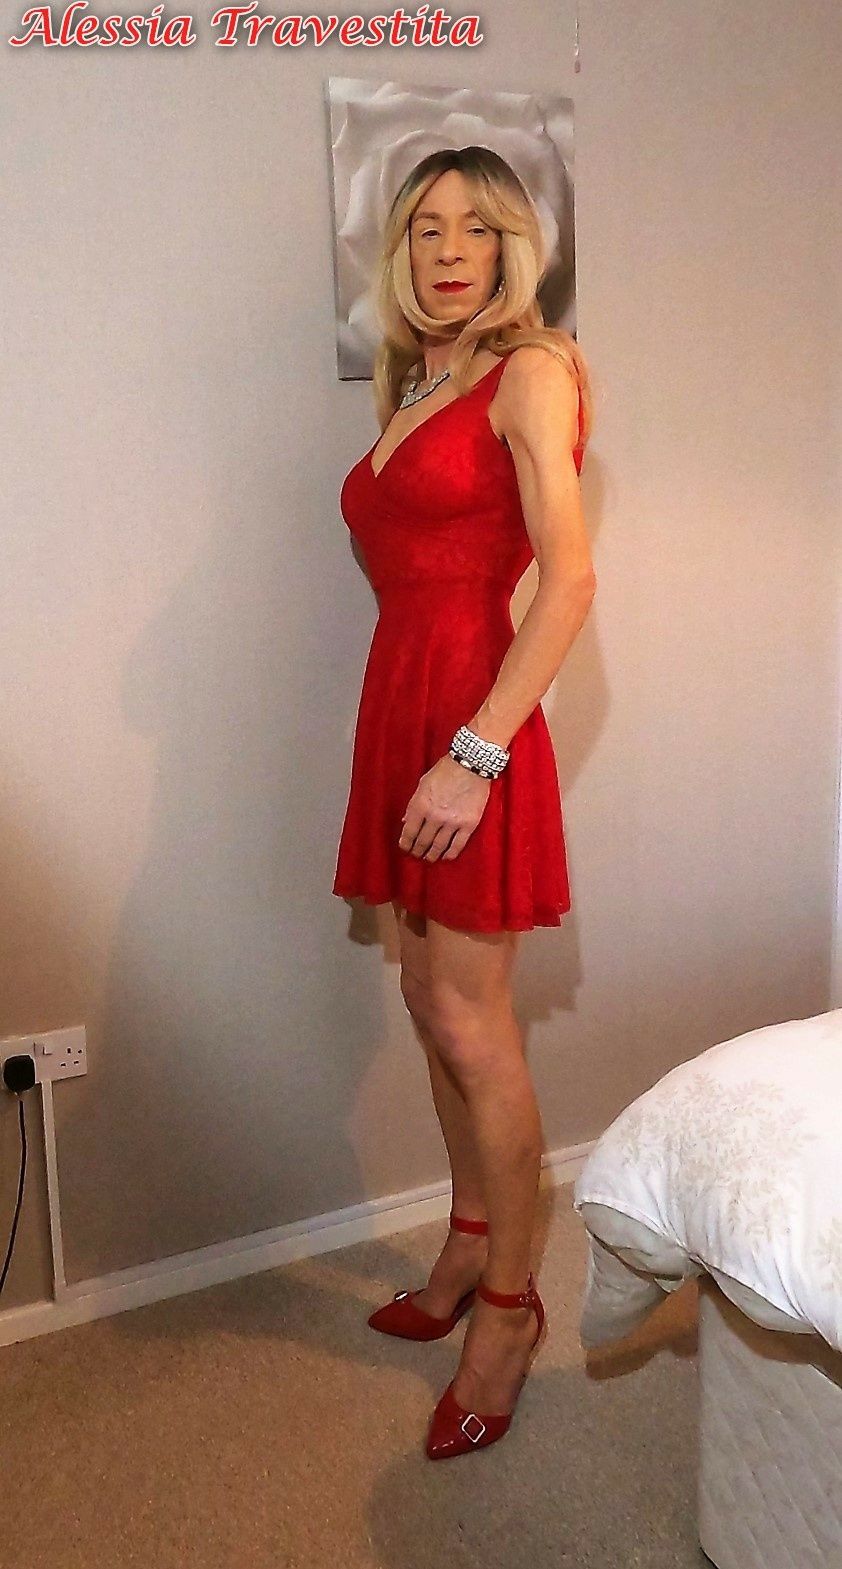 65 Alessia Travestita in Flirty Red Dress #16